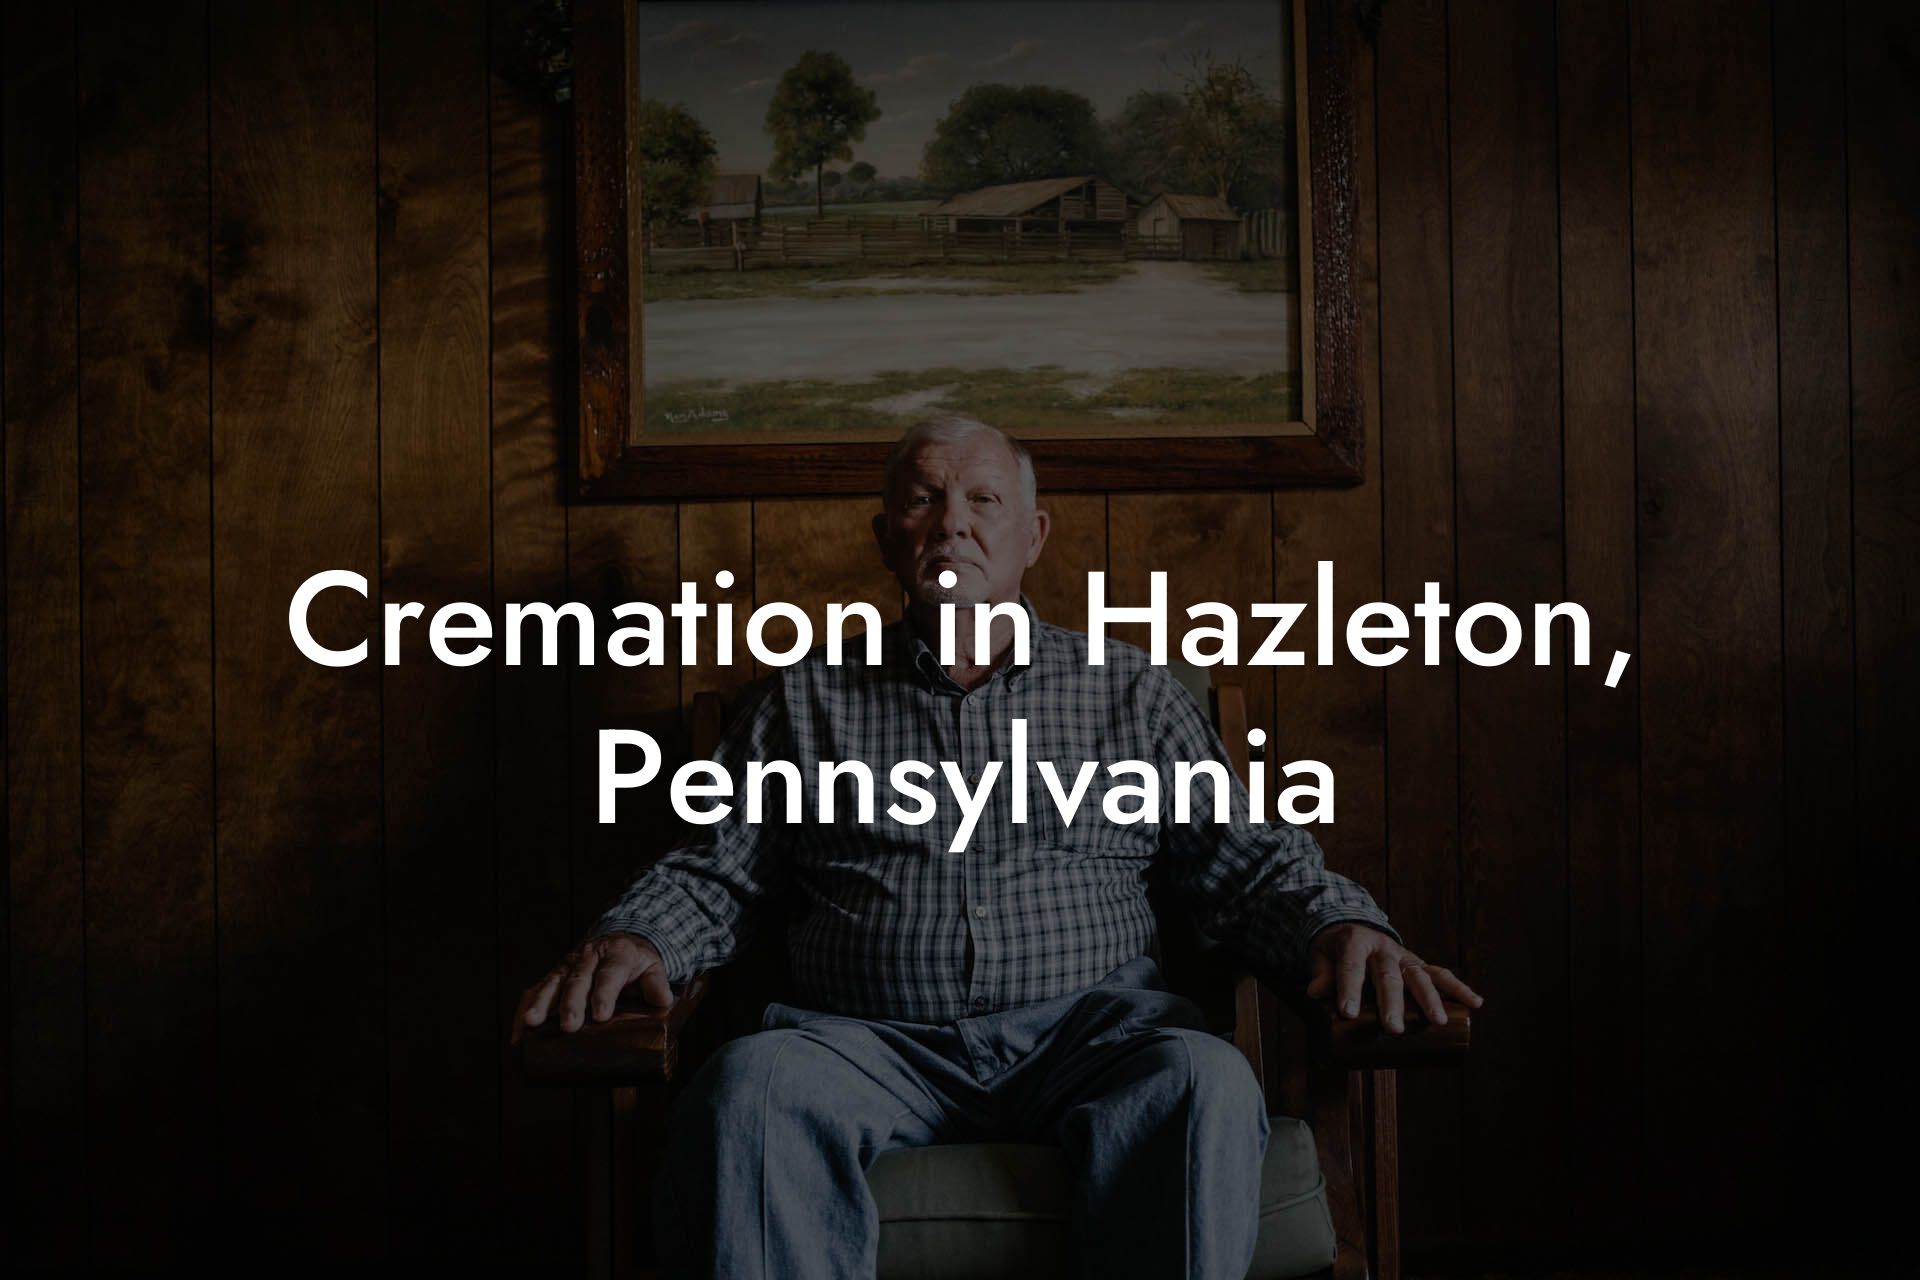 Cremation in Hazleton, Pennsylvania